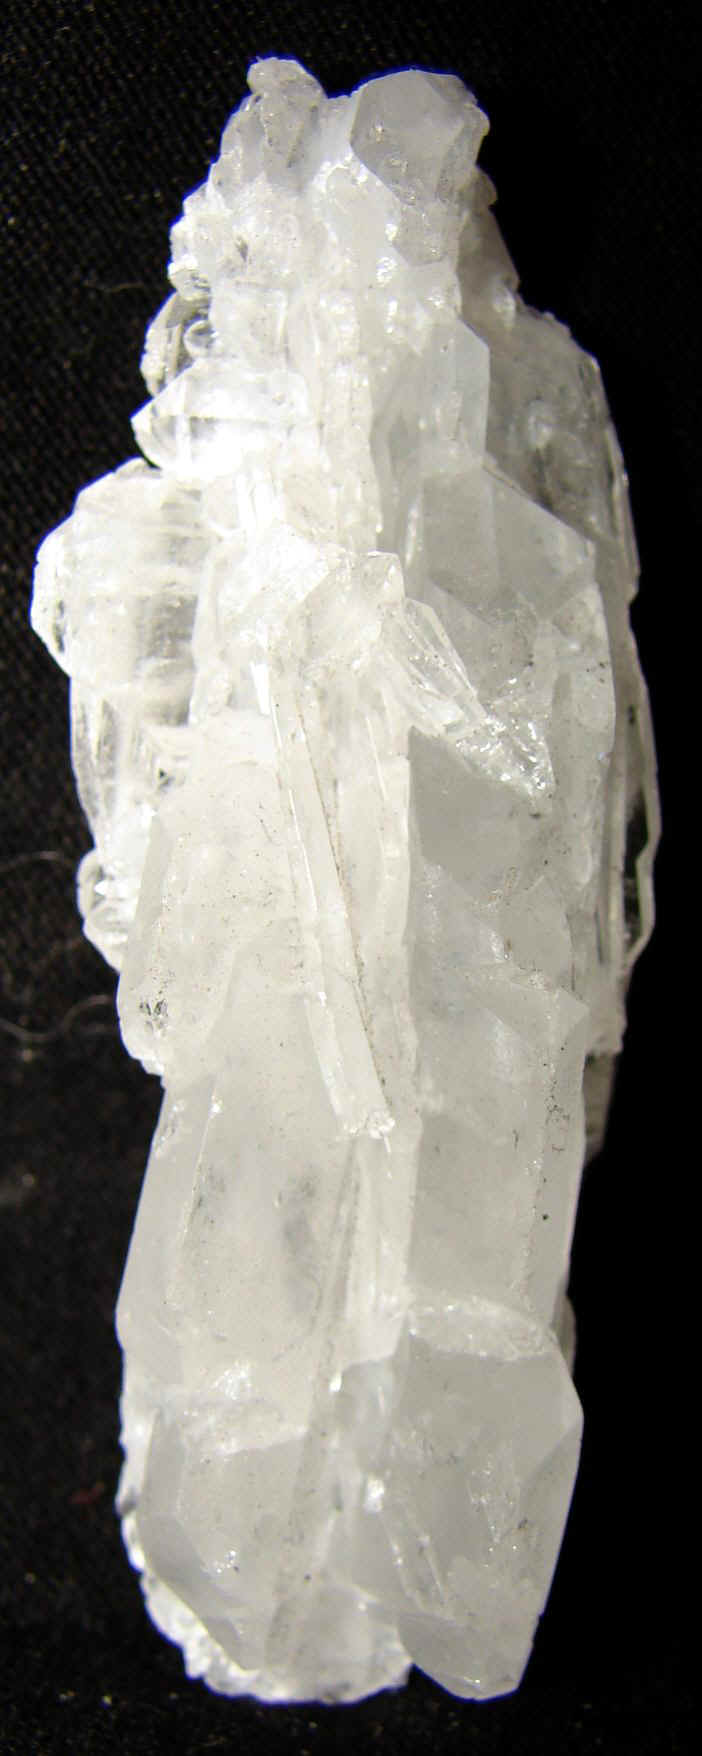 http://www.quartzcrystals.net/icexl-21.jpg (582341 bytes)